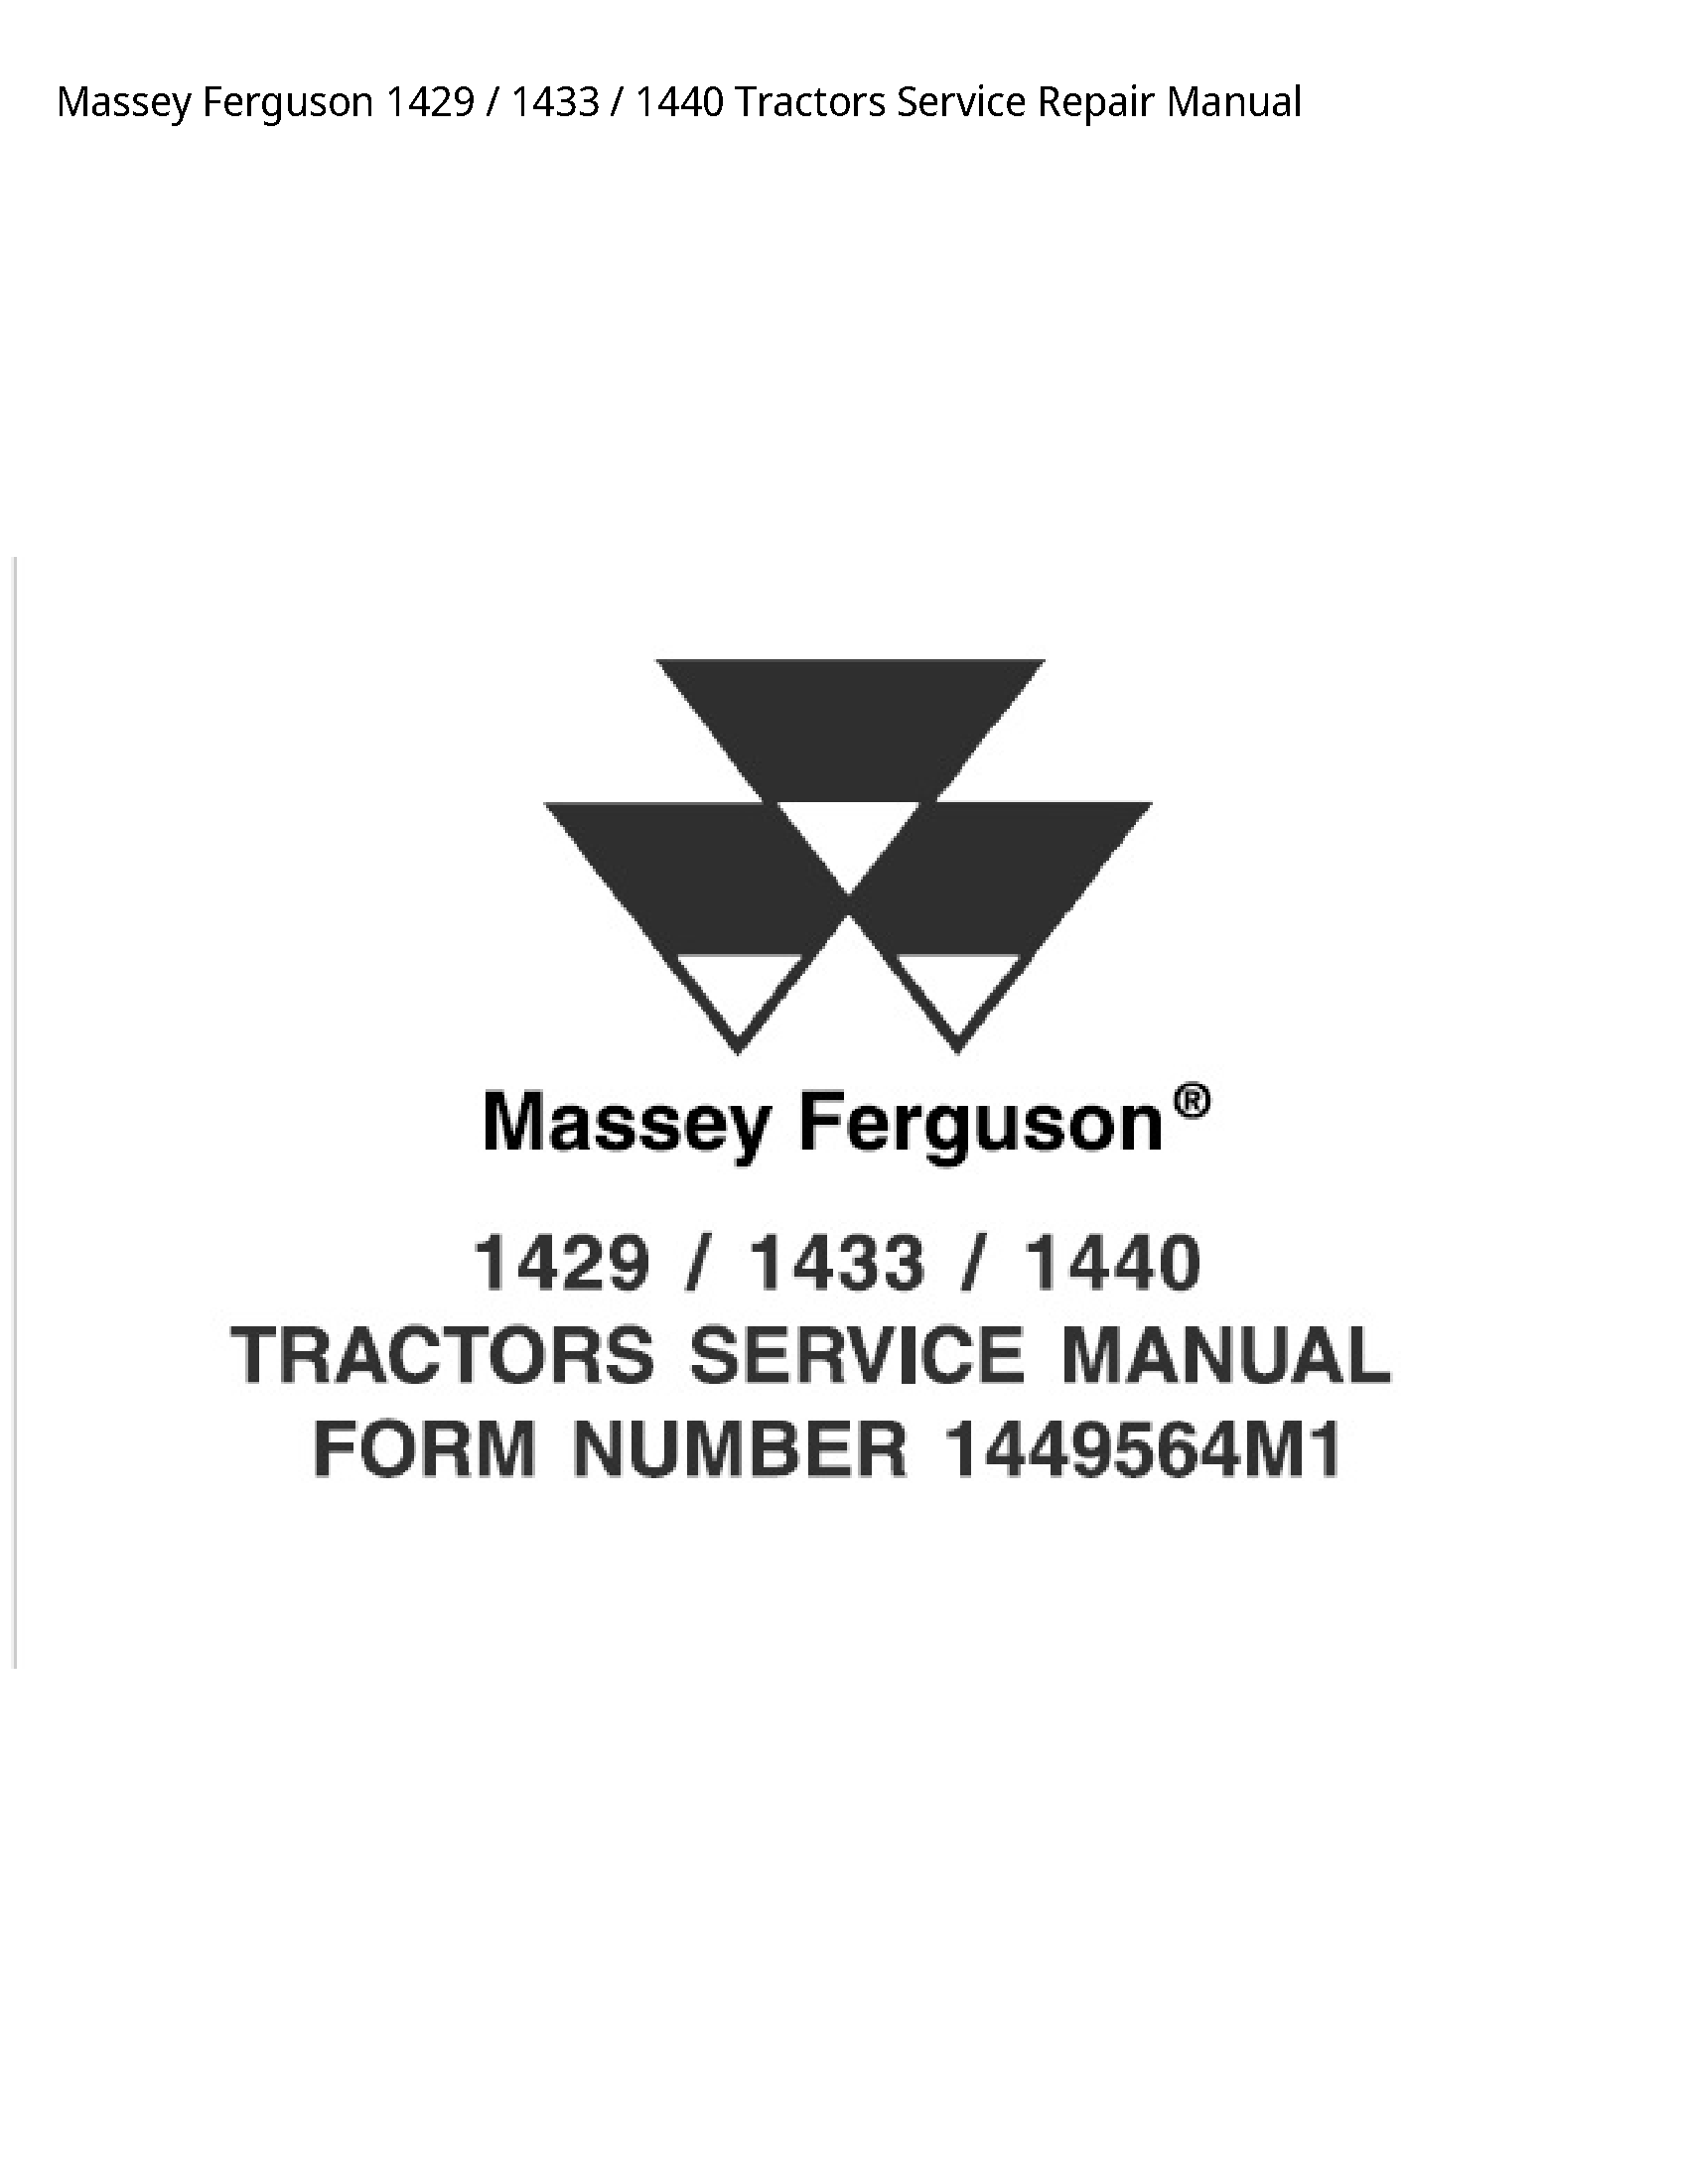 Massey Ferguson 1429 Tractors manual